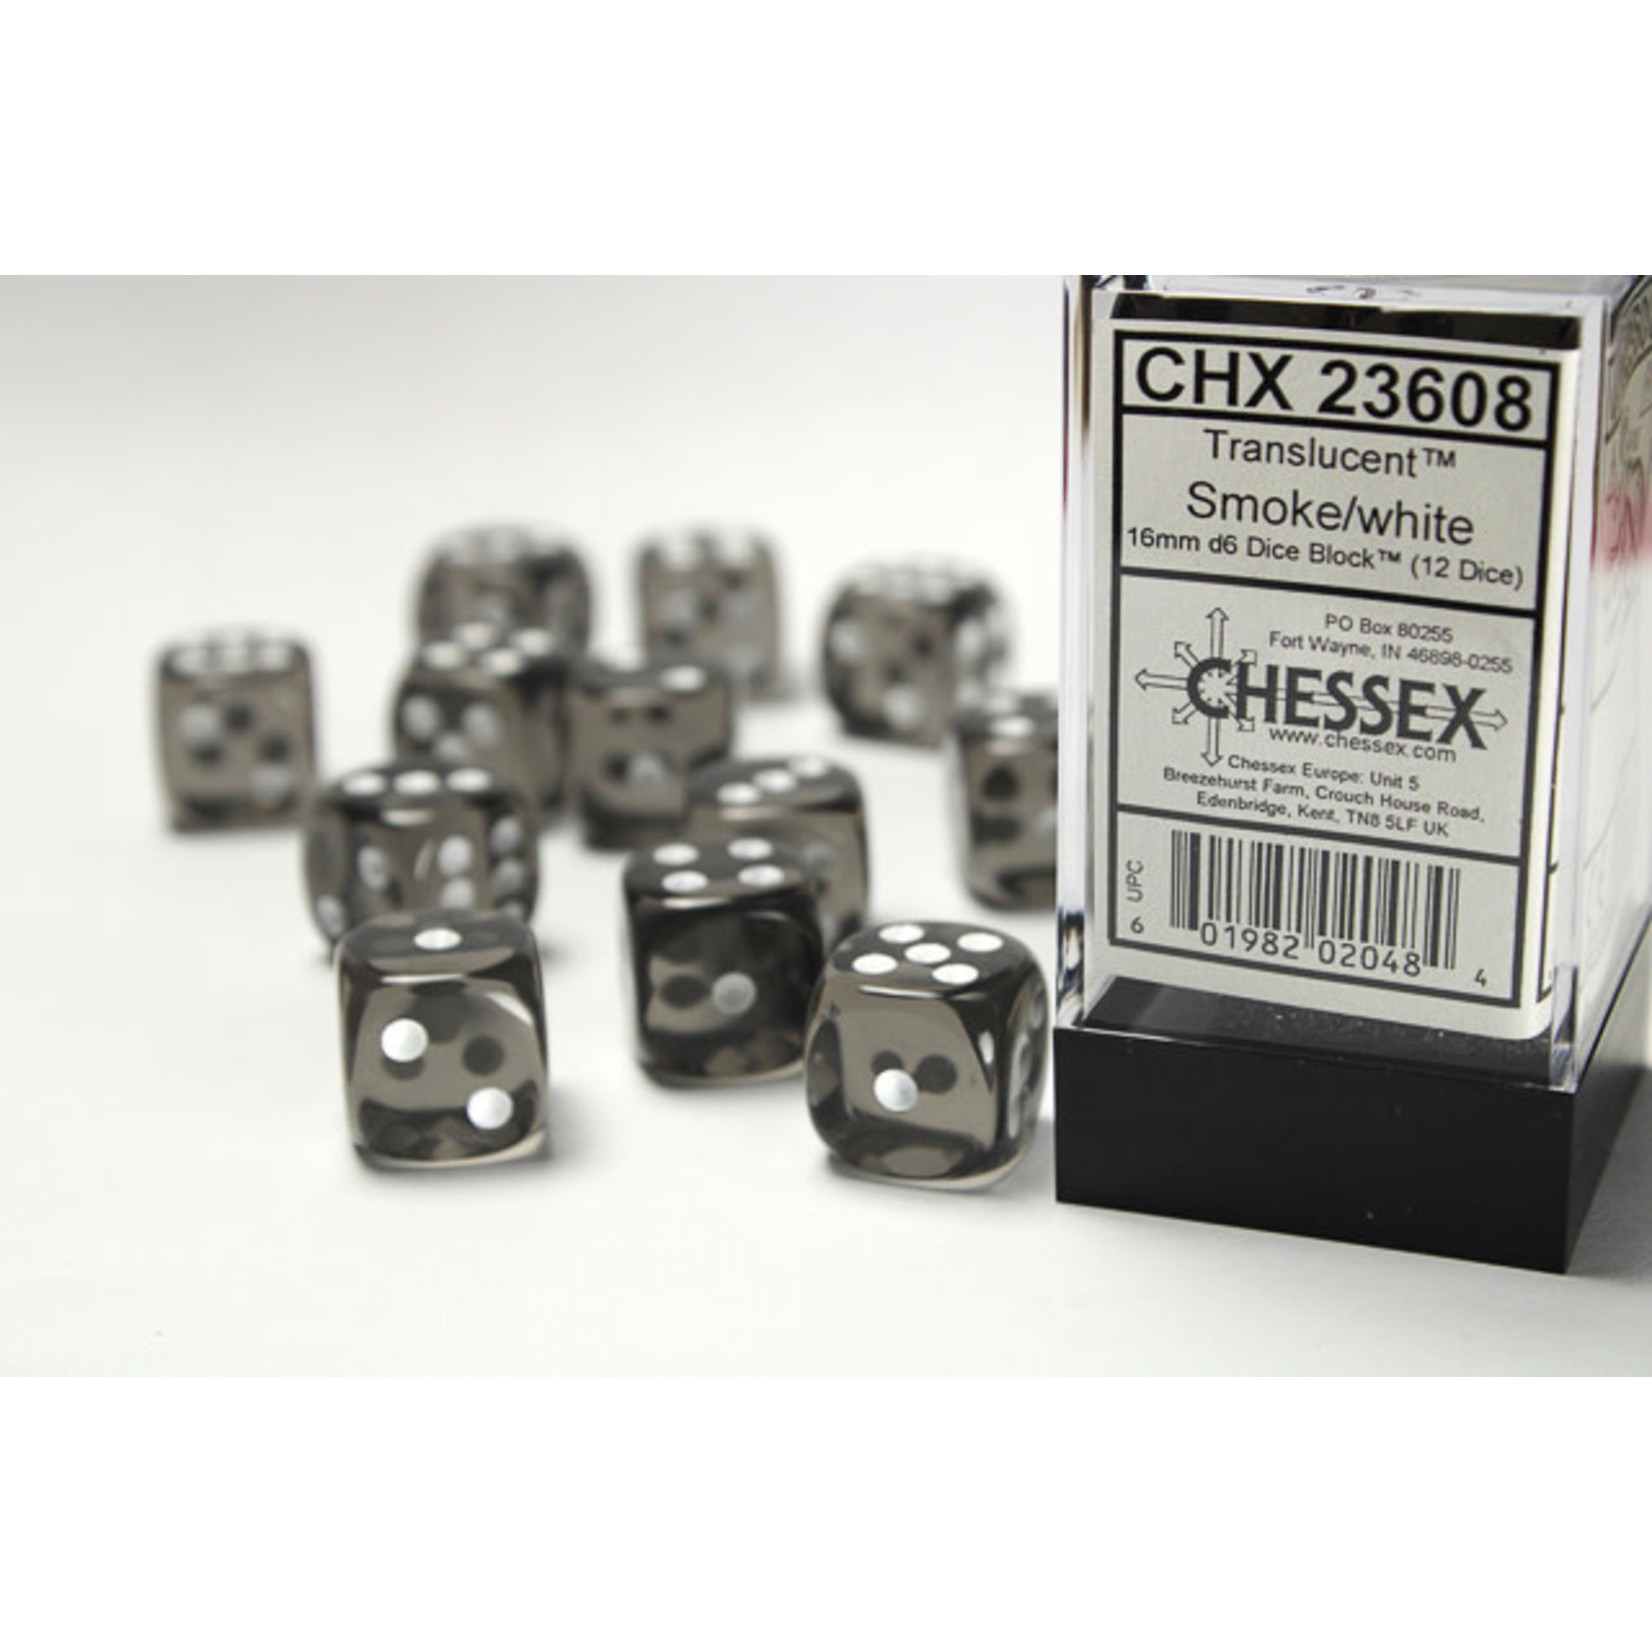 Chessex 23608 Translucent 12pc Smoke/White Dice